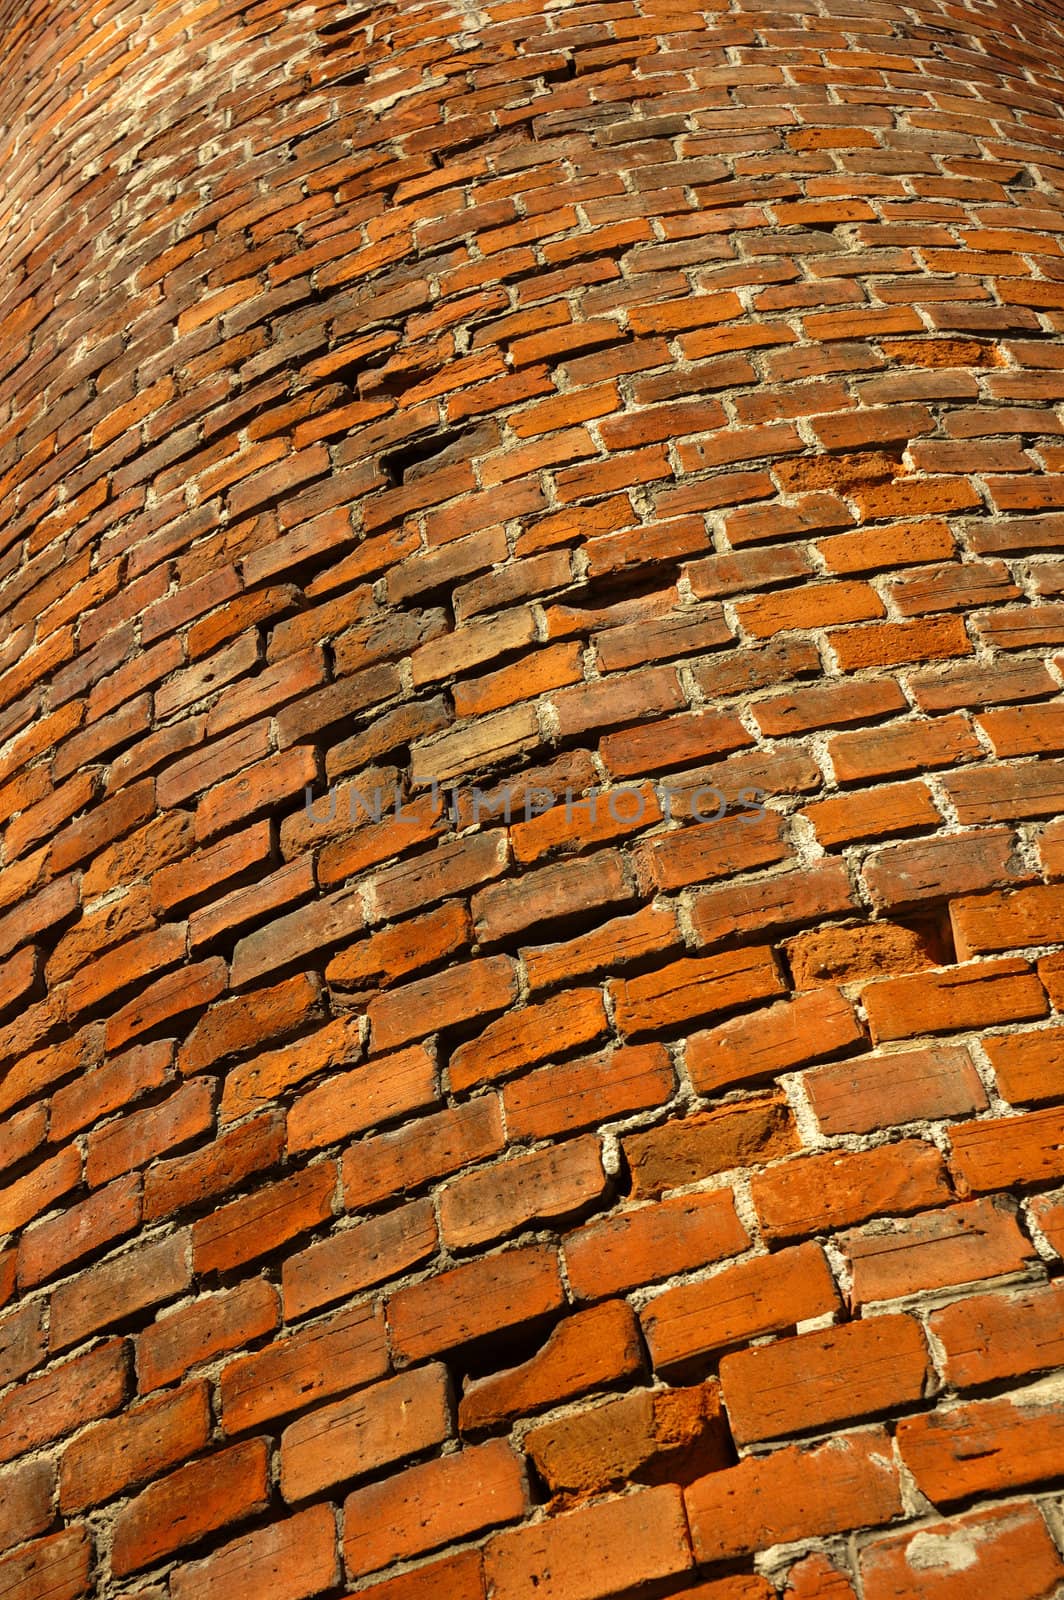 Burned brick by Bateleur